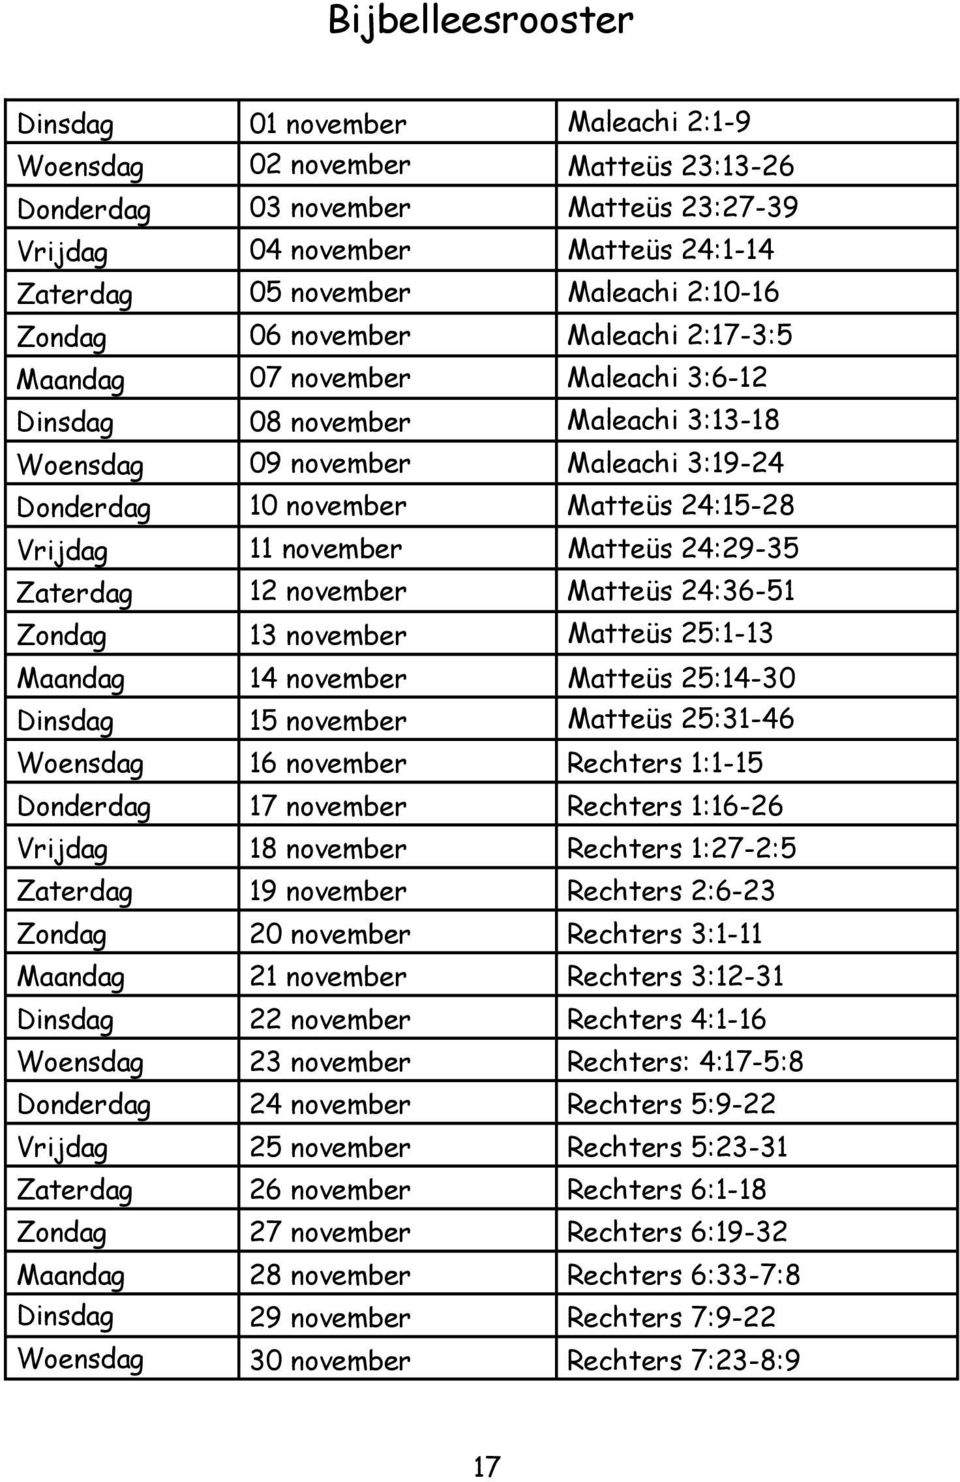 Vrijdag 11 november Matteüs 24:29-35 Zaterdag 12 november Matteüs 24:36-51 Zondag 13 november Matteüs 25:1-13 Maandag 14 november Matteüs 25:14-30 Dinsdag 15 november Matteüs 25:31-46 Woensdag 16